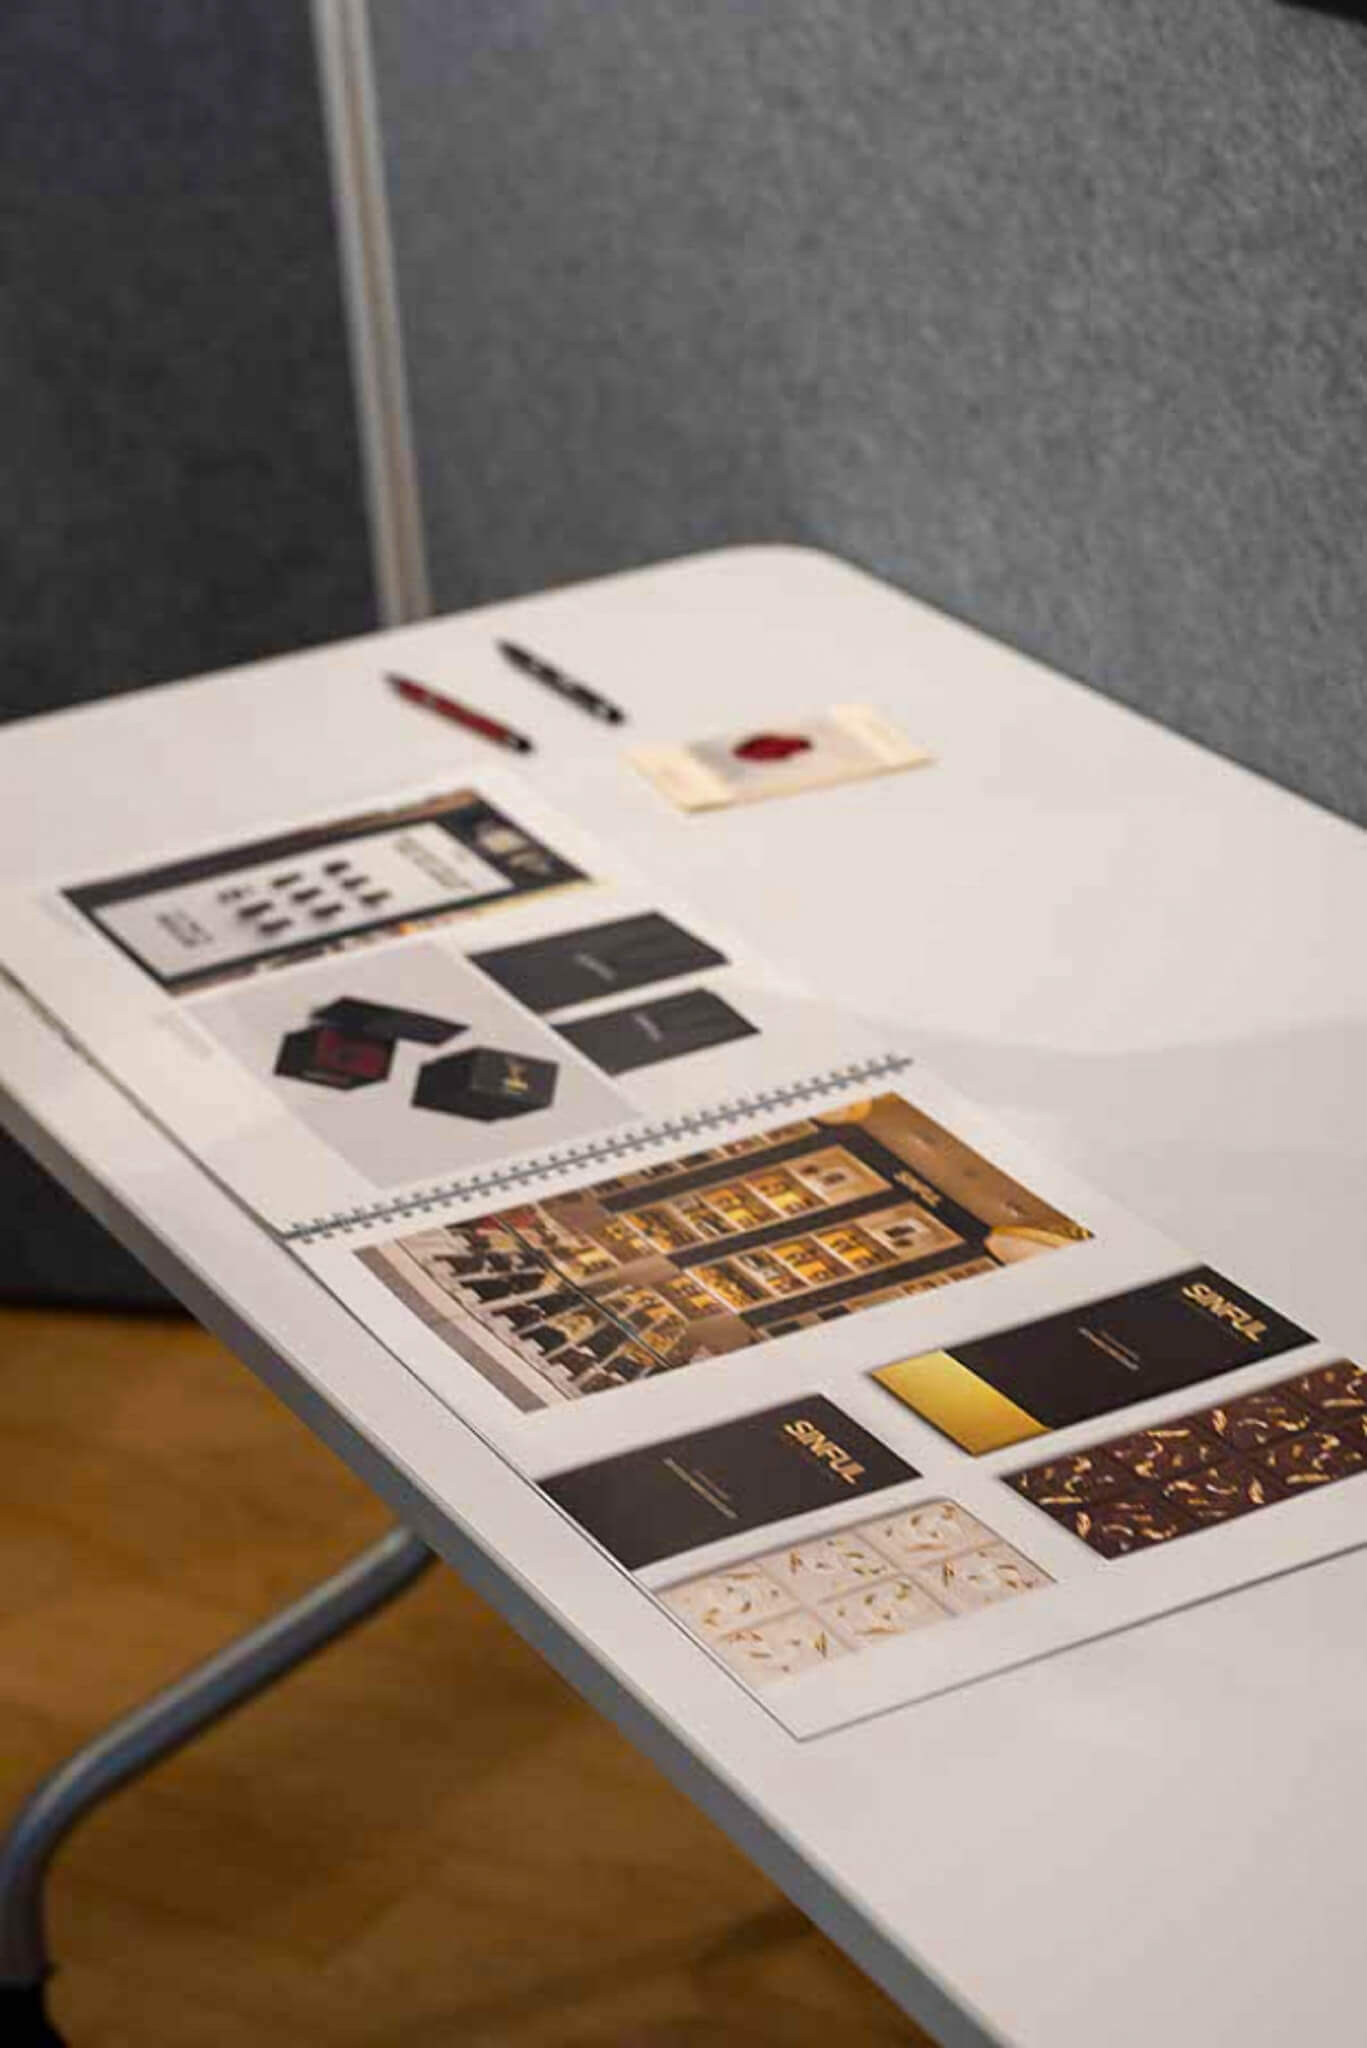 Design portfolio laying on a table